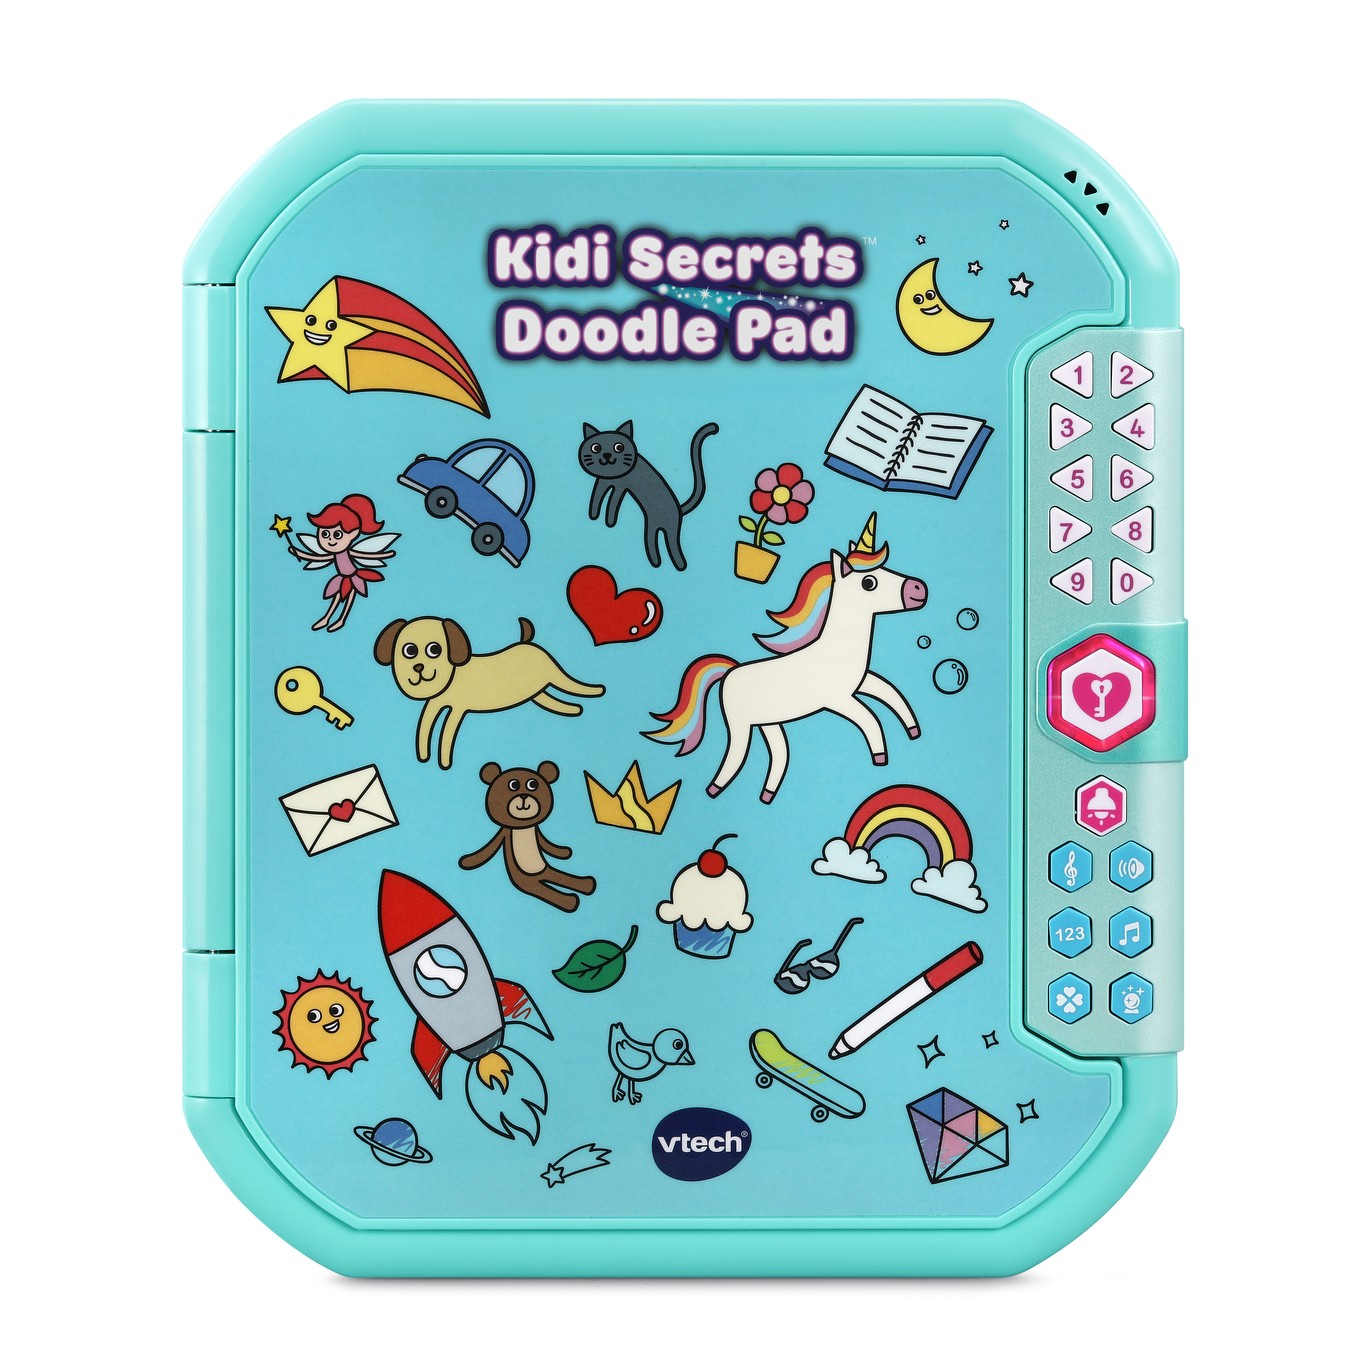 VTech - KidiSecrets, My MagicLocker Pink and Purple Case, Secret